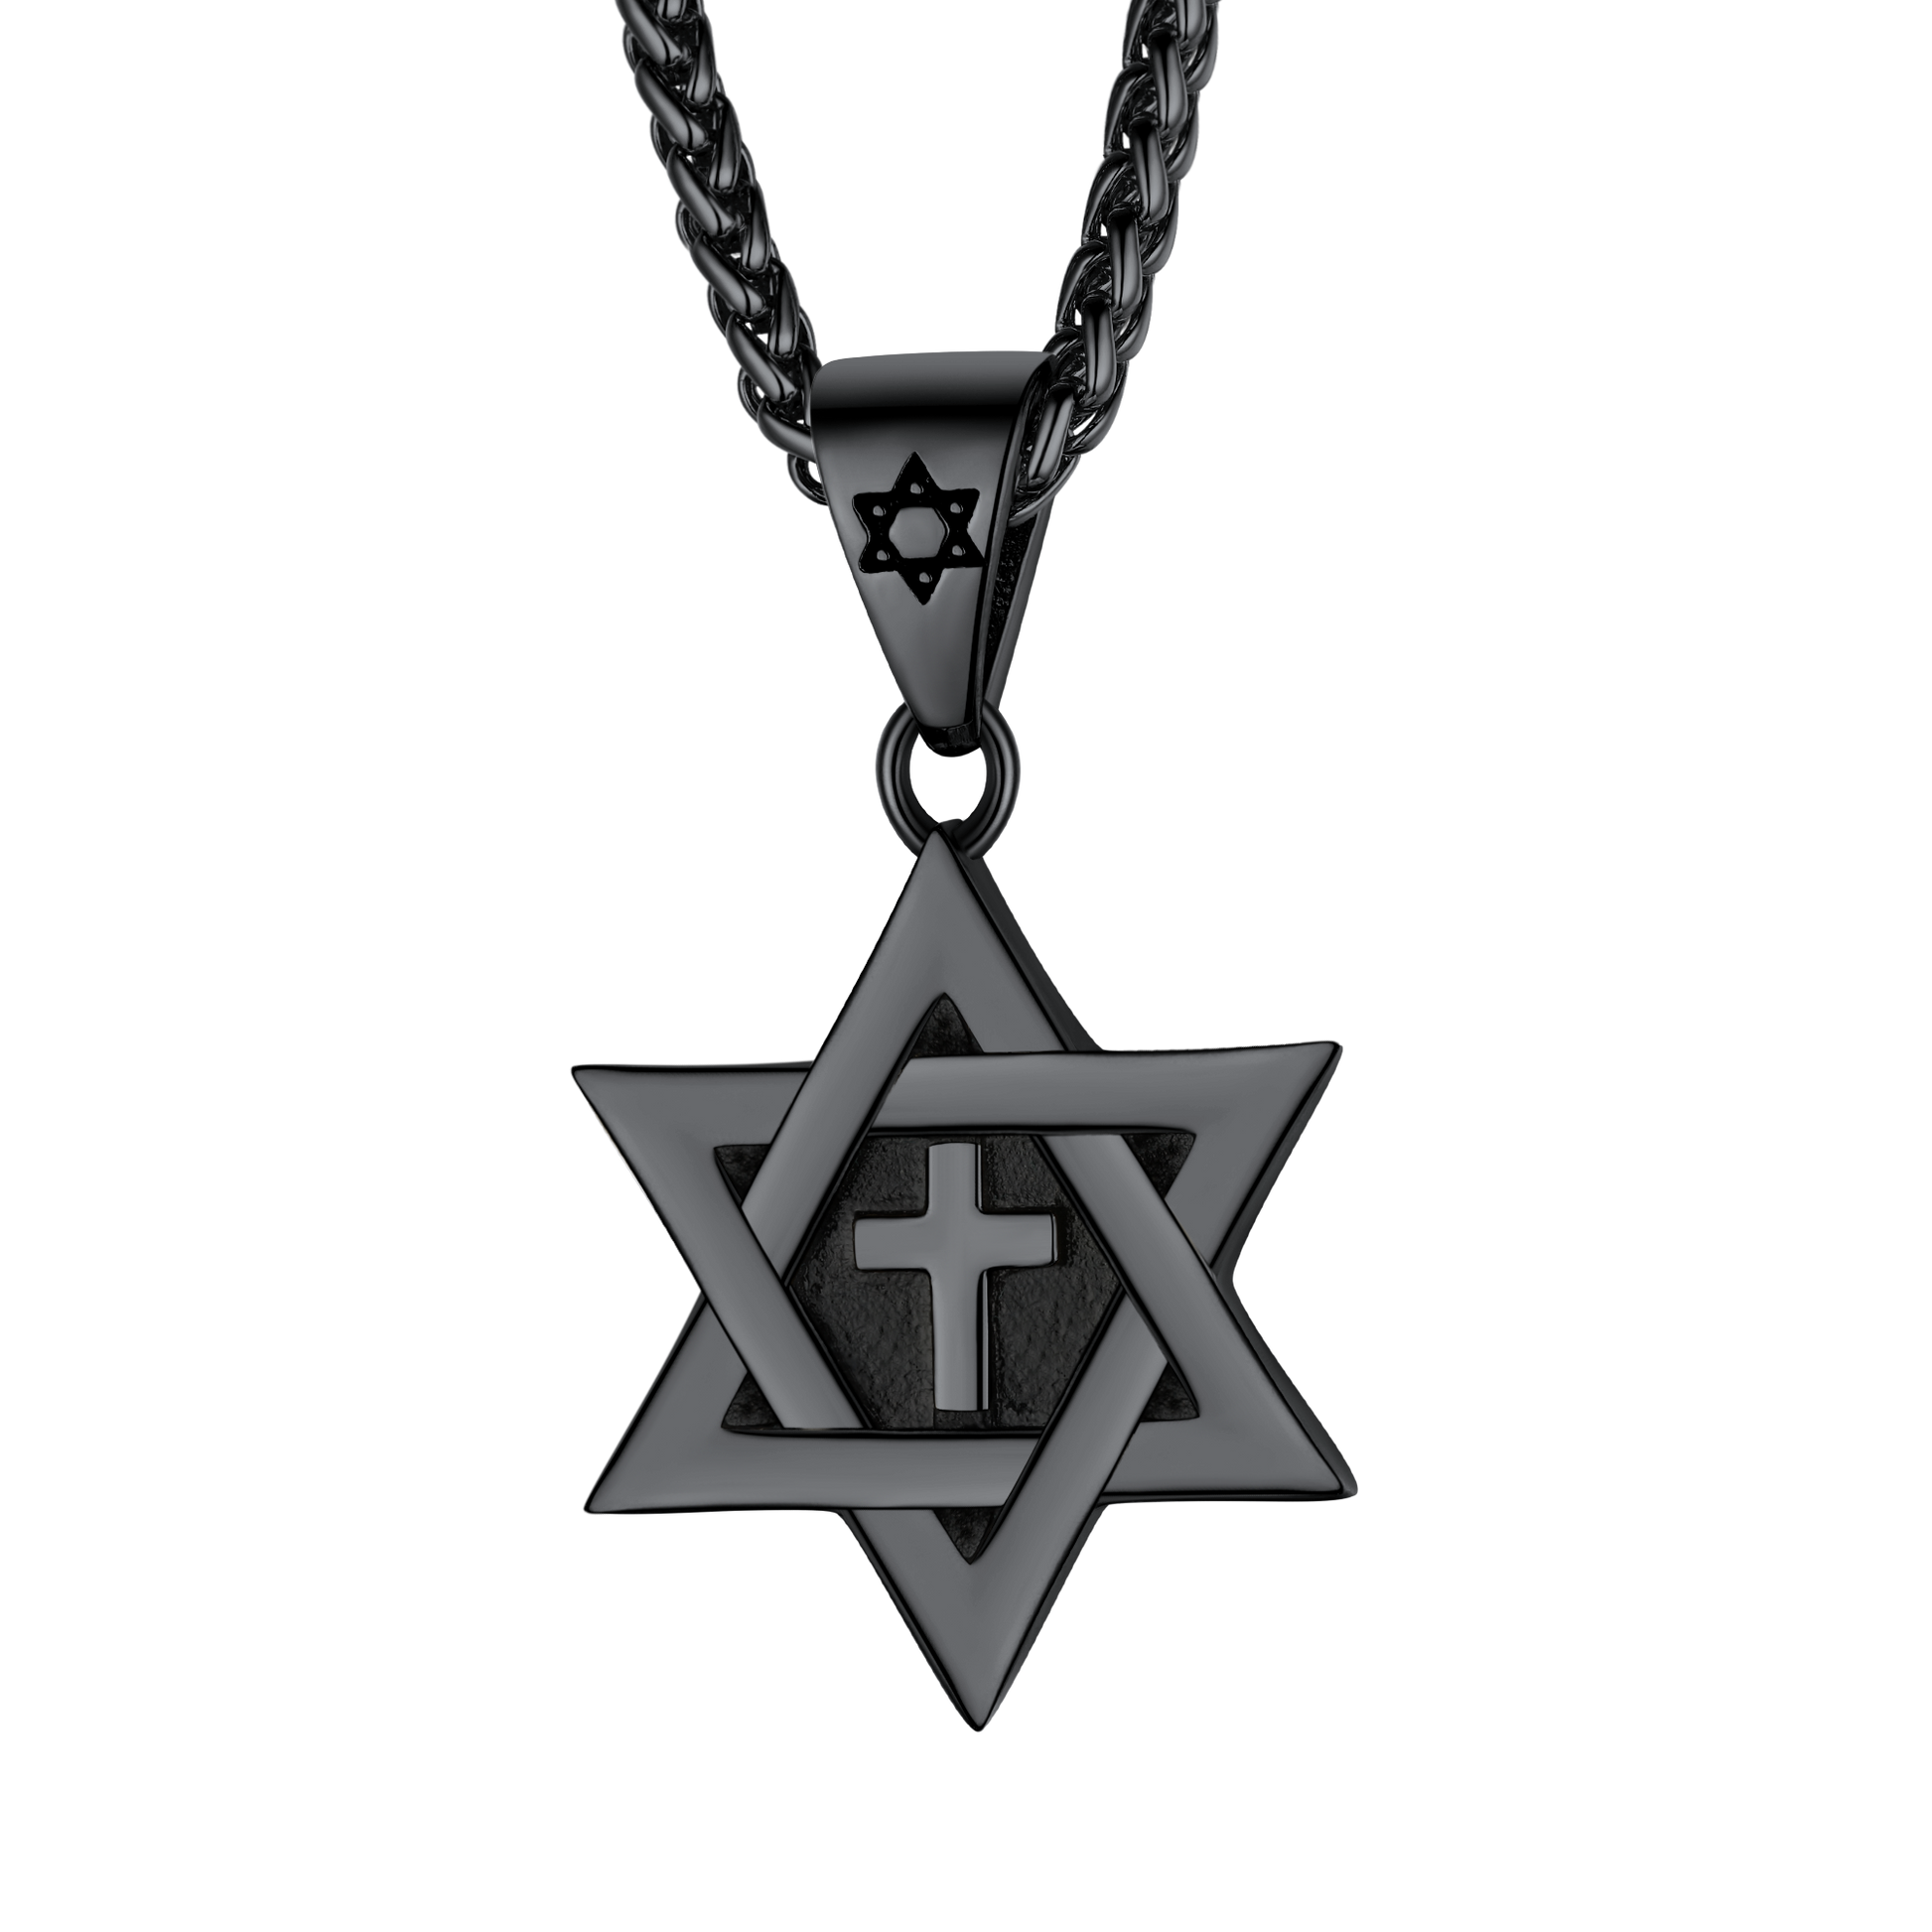 FaithHeart Jewish Star of David With Cross Necklace for Men FaithHeart